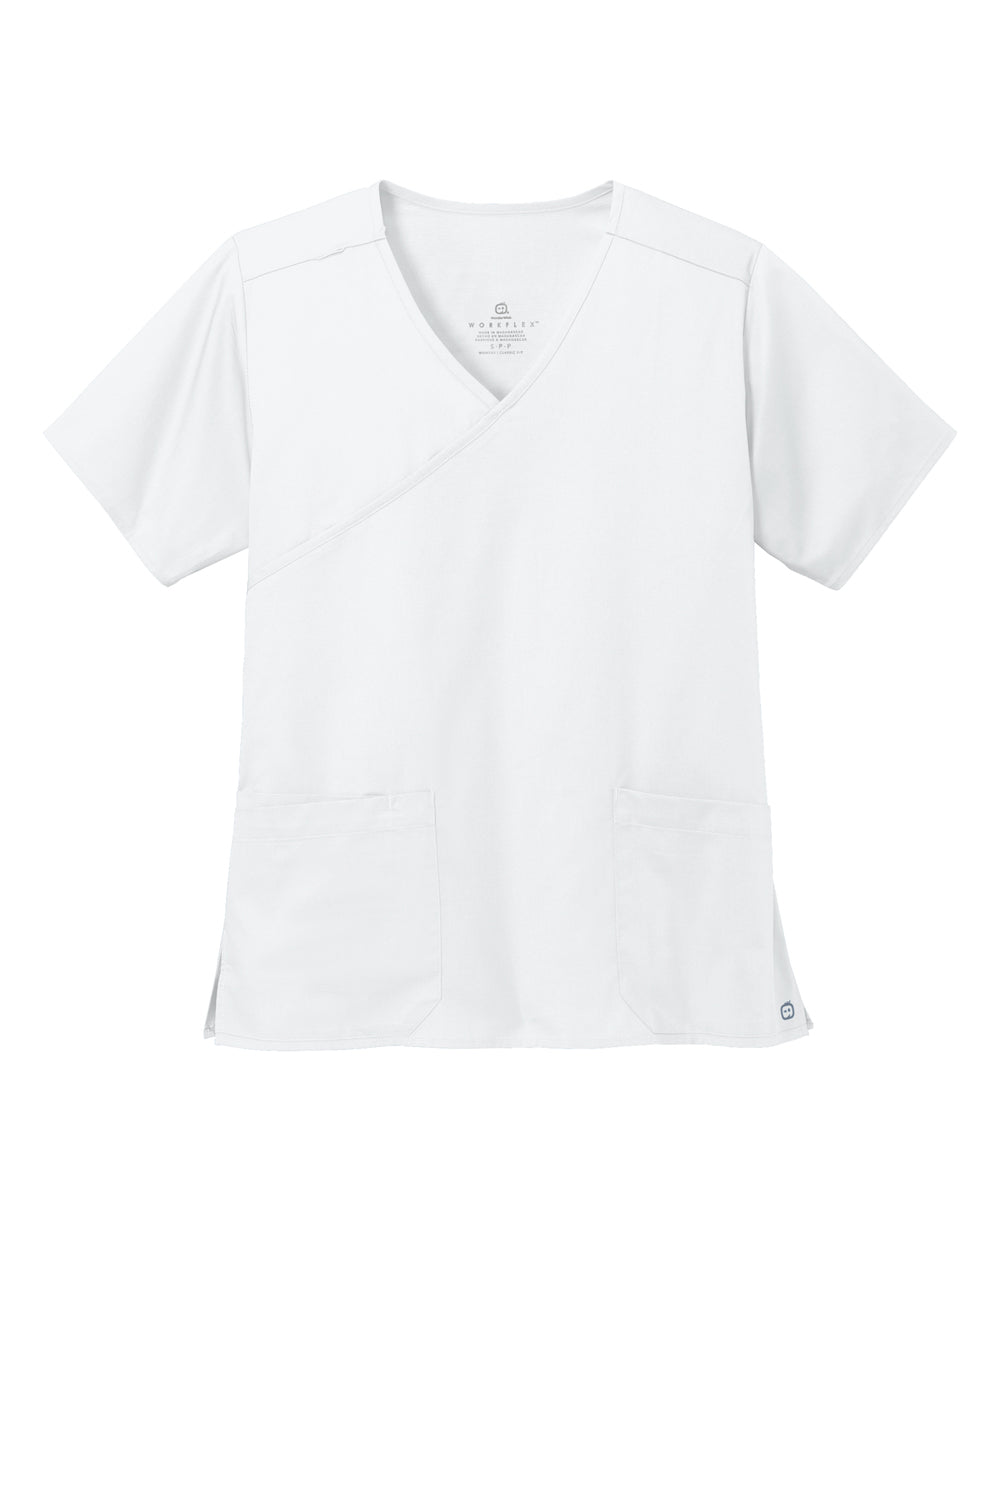 Wonderwink WW4760 WorkFlex Short Sleeve V-Neck Mock Wrap Shirt White Flat Front